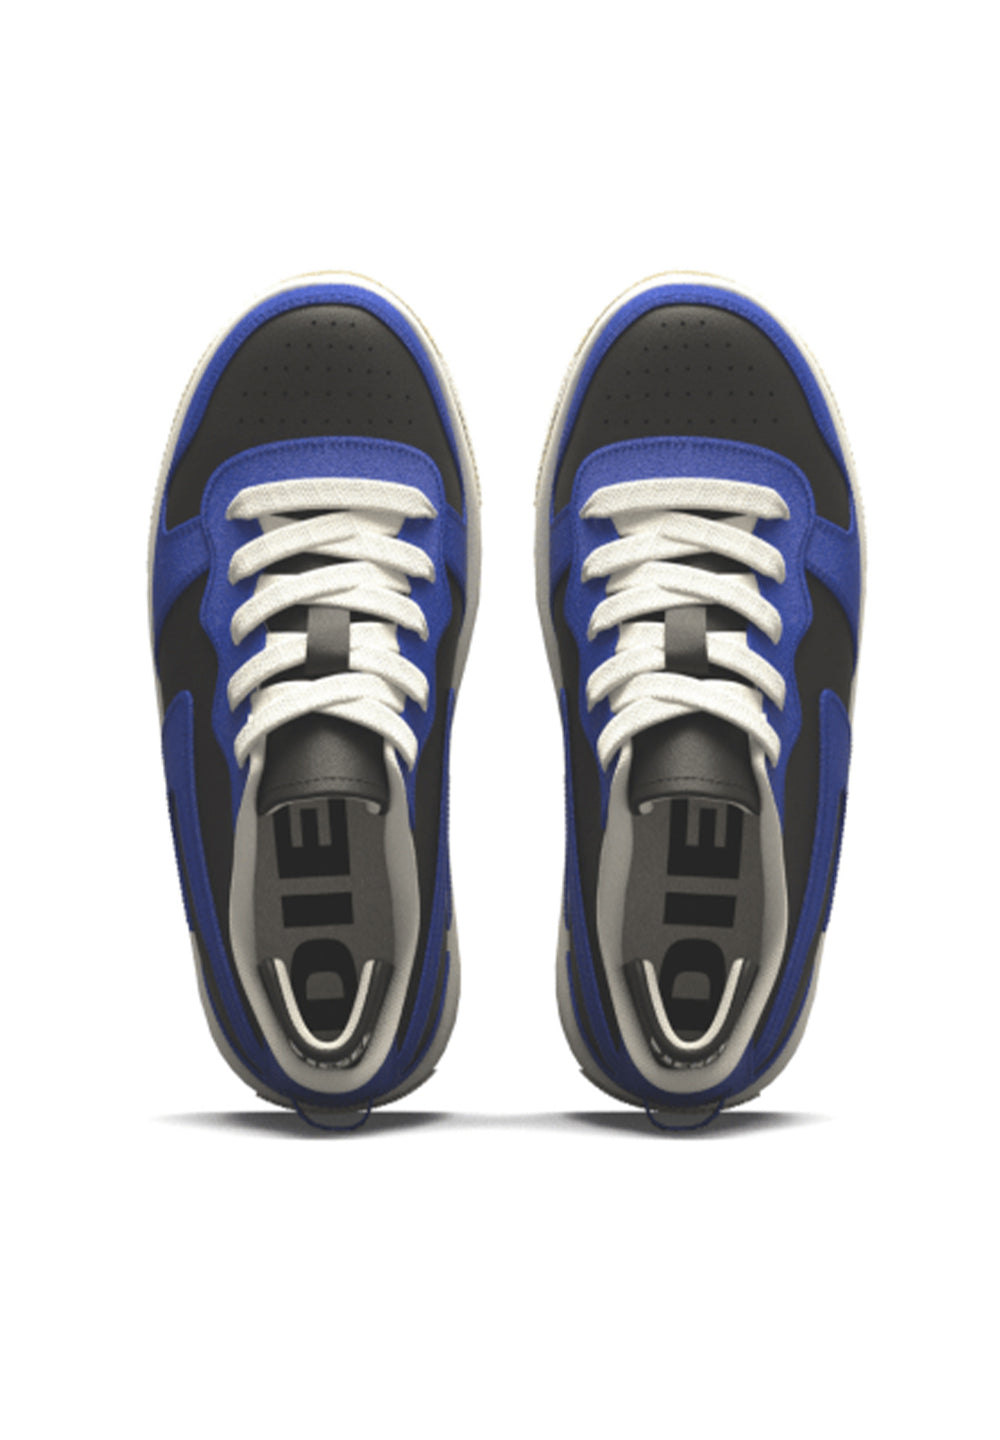 Blue-black shoes for children